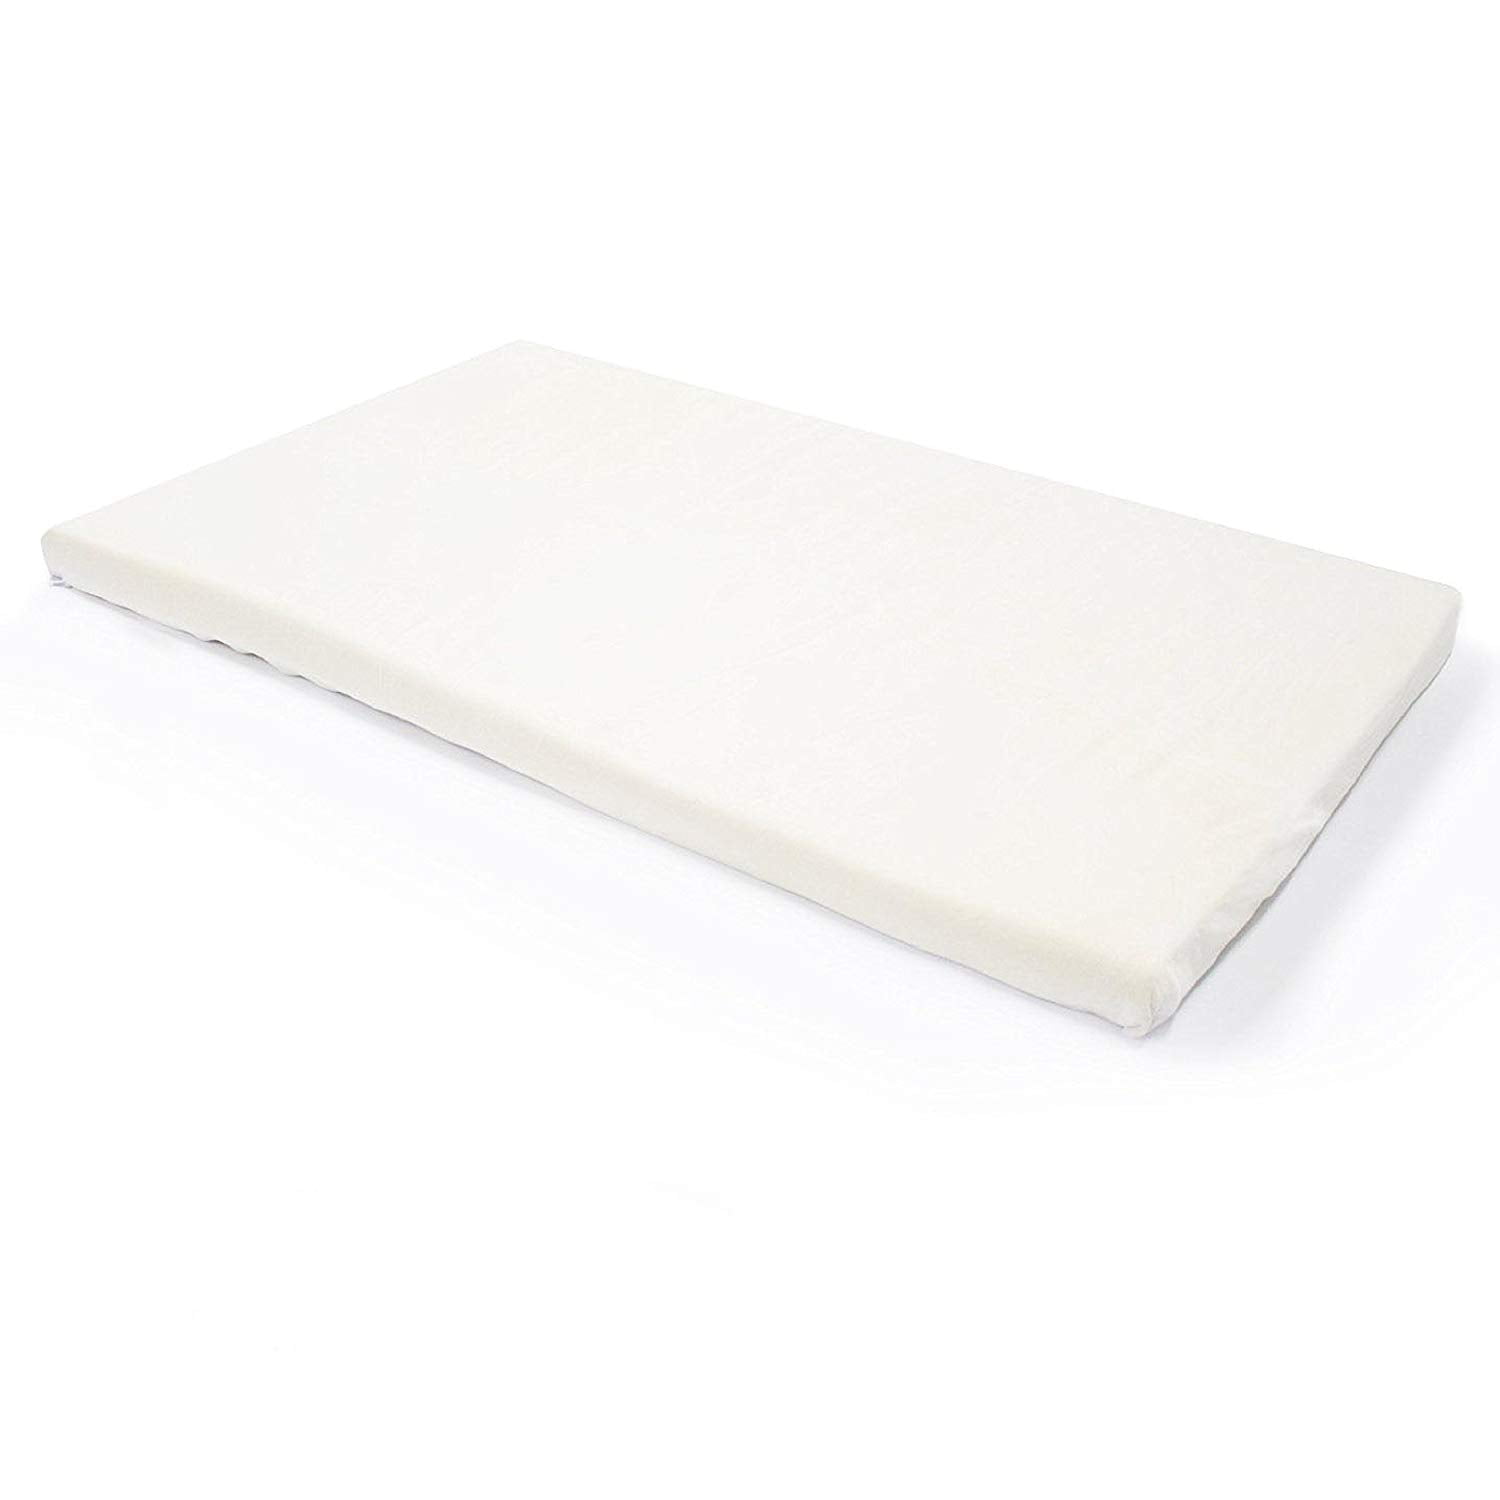 Ventilated Memory Foam Crib Mattress Topper | Milliard Bedding - Milliard  Brands